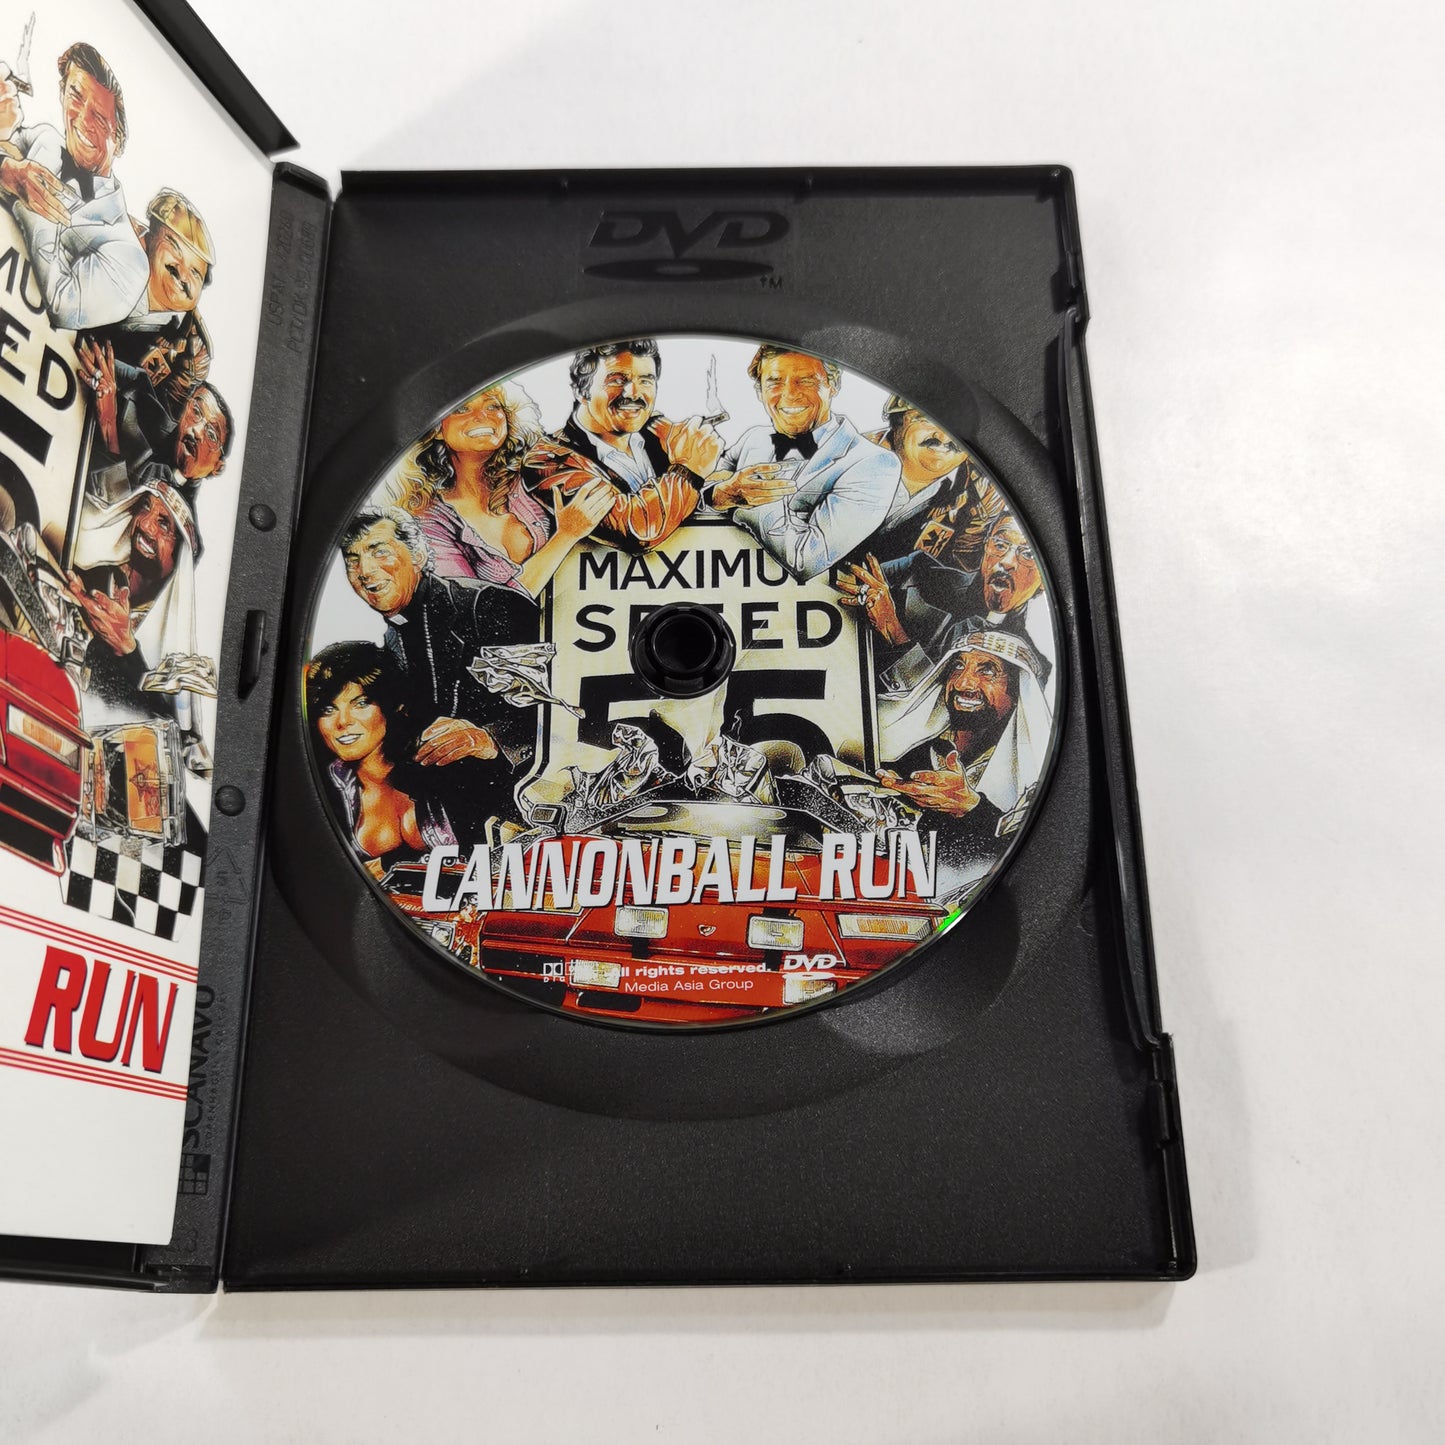 The Cannonball Run (1981) - DVD SE 2001